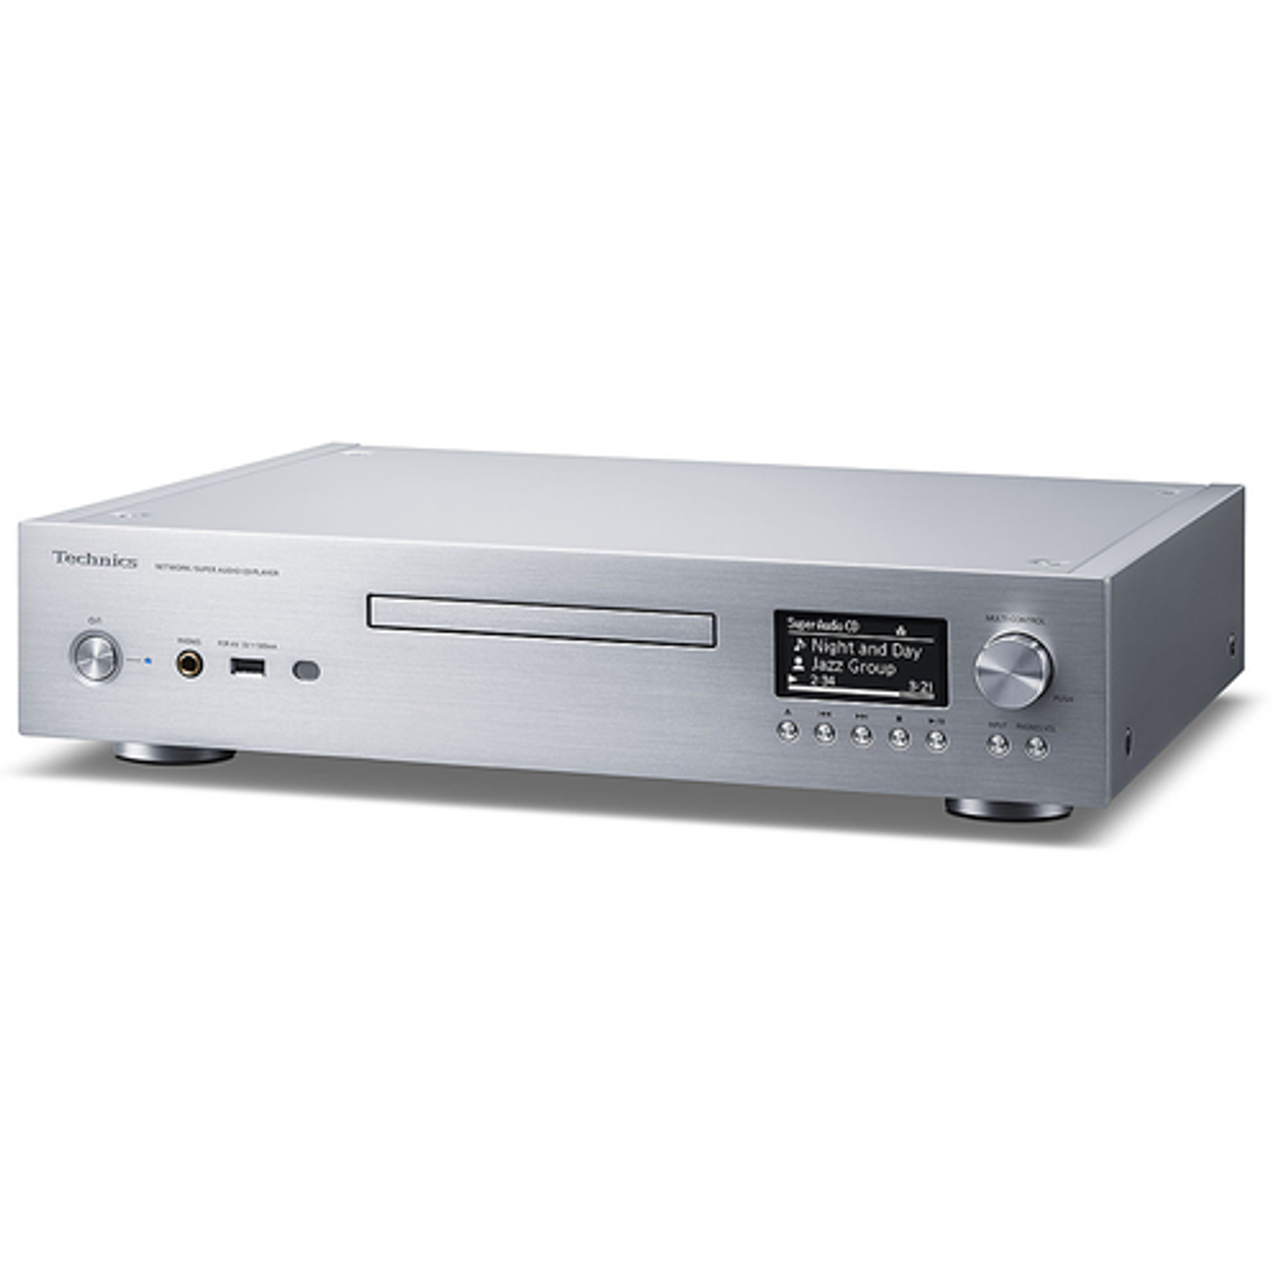 Technics Grand Class SL-G700M2 Network/Super Audio CD Player - Silver